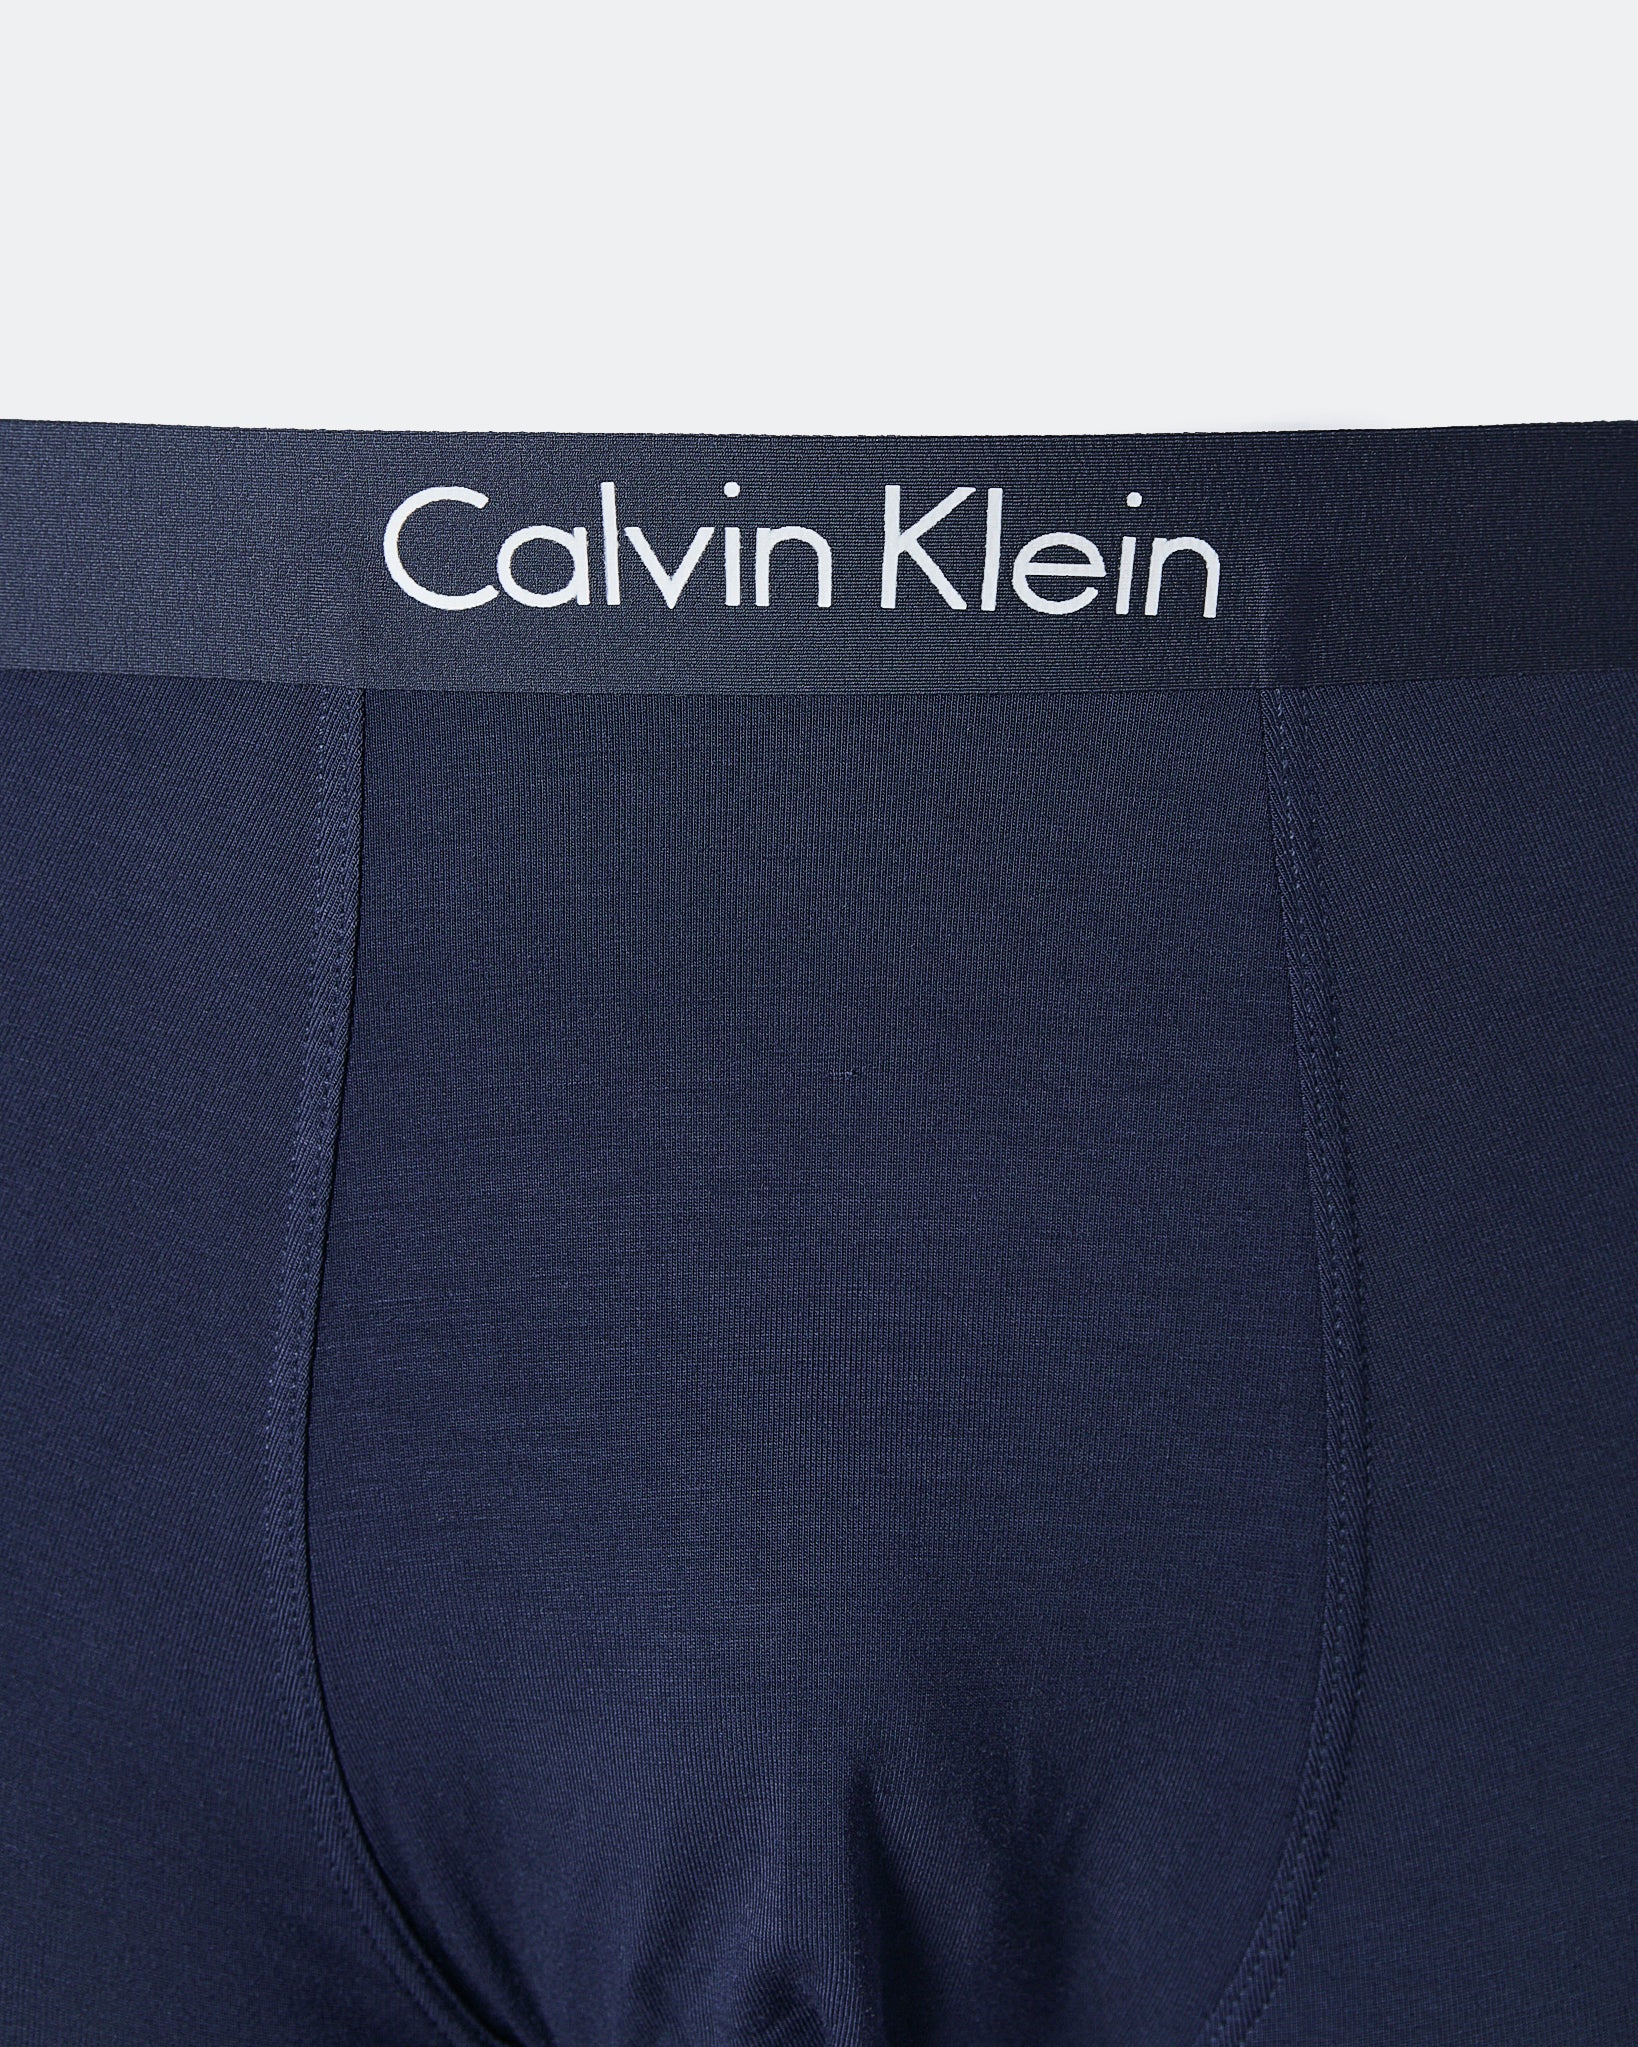 CK Light Weight Men Blue Underwear 6.90